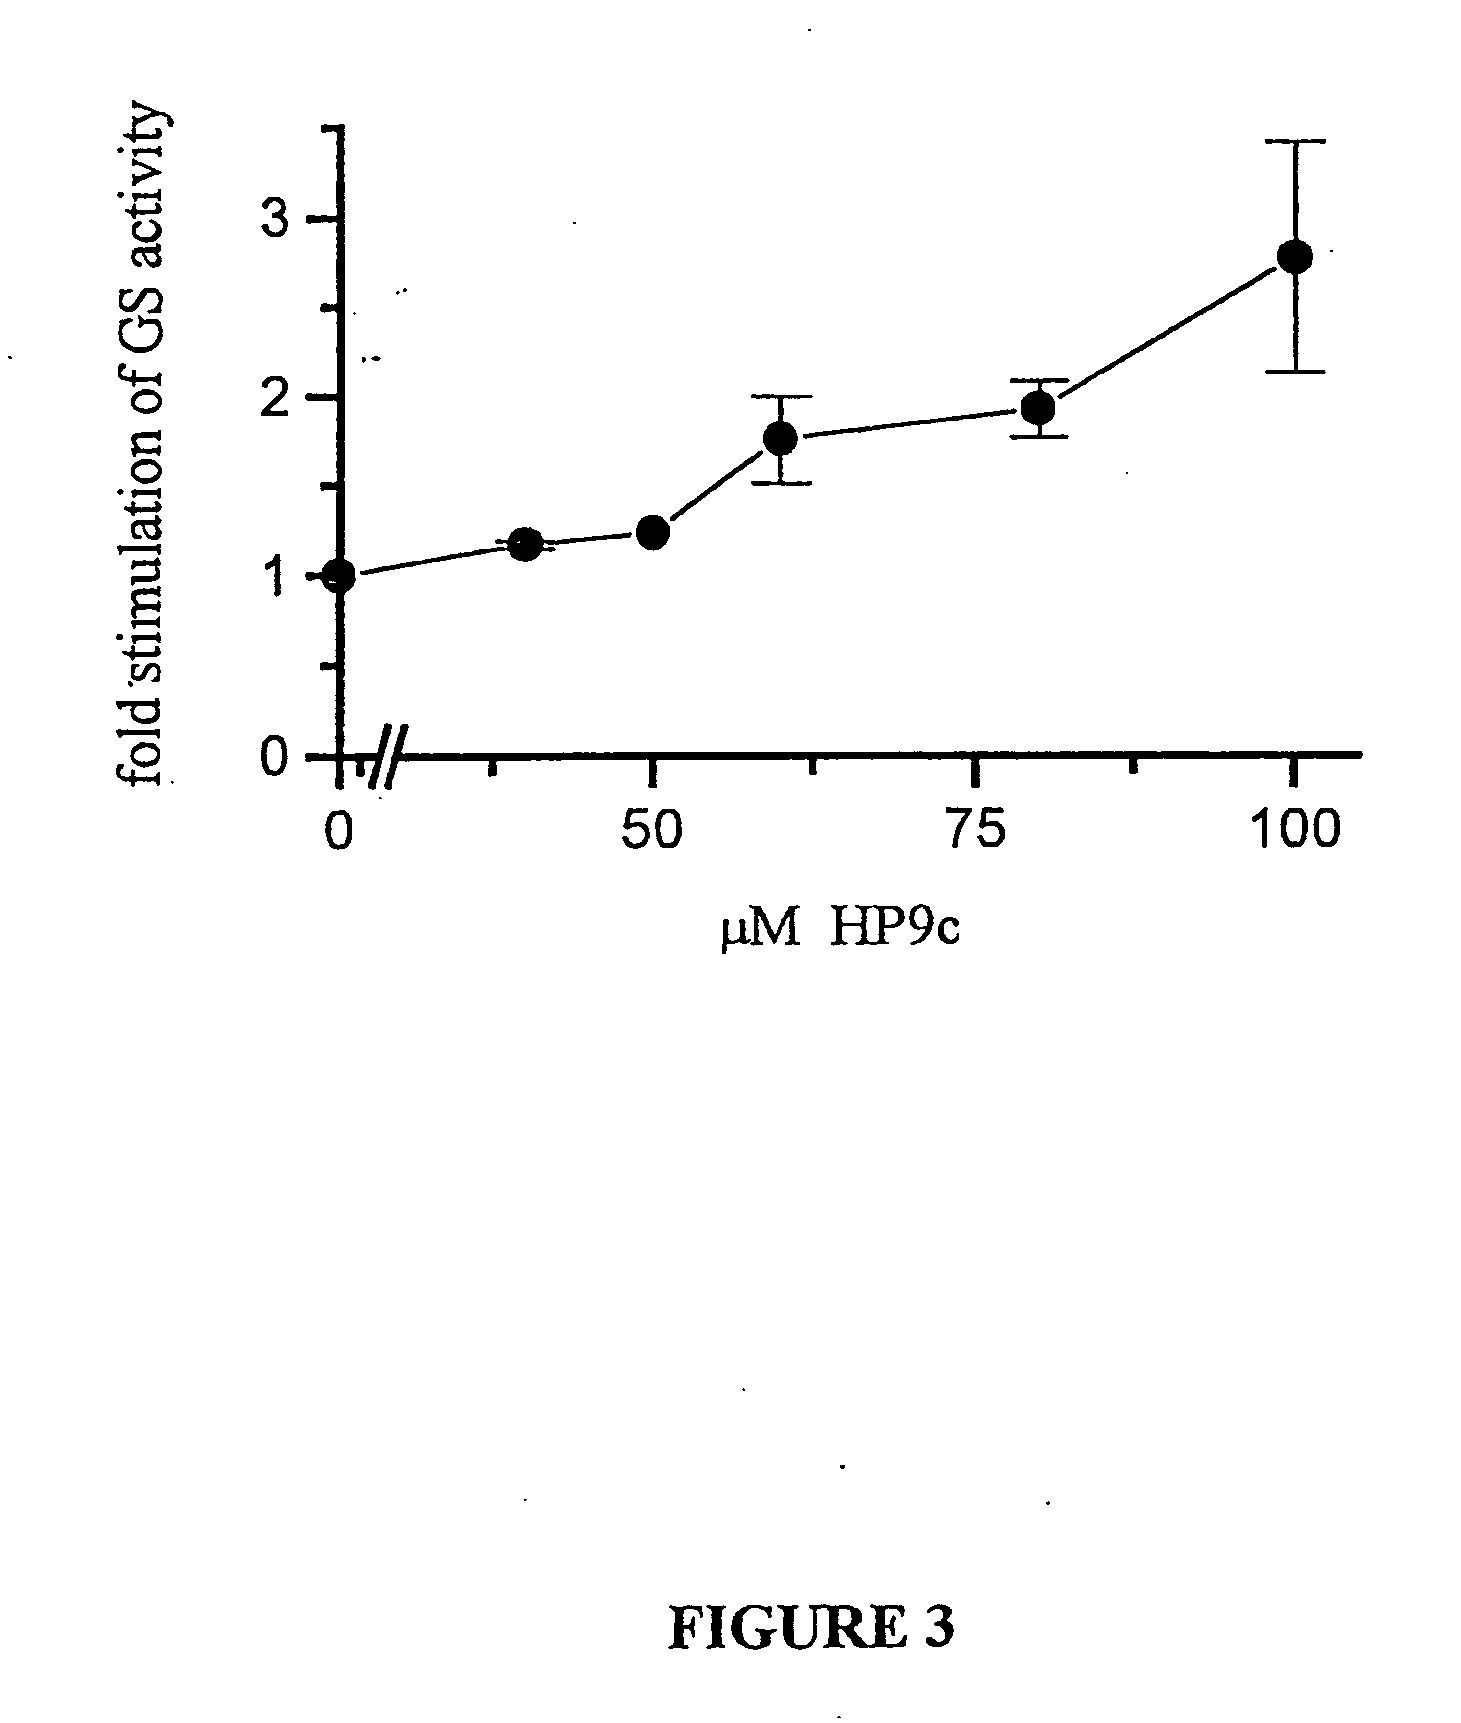 Glycogen synthase kinase-3 inhibitors